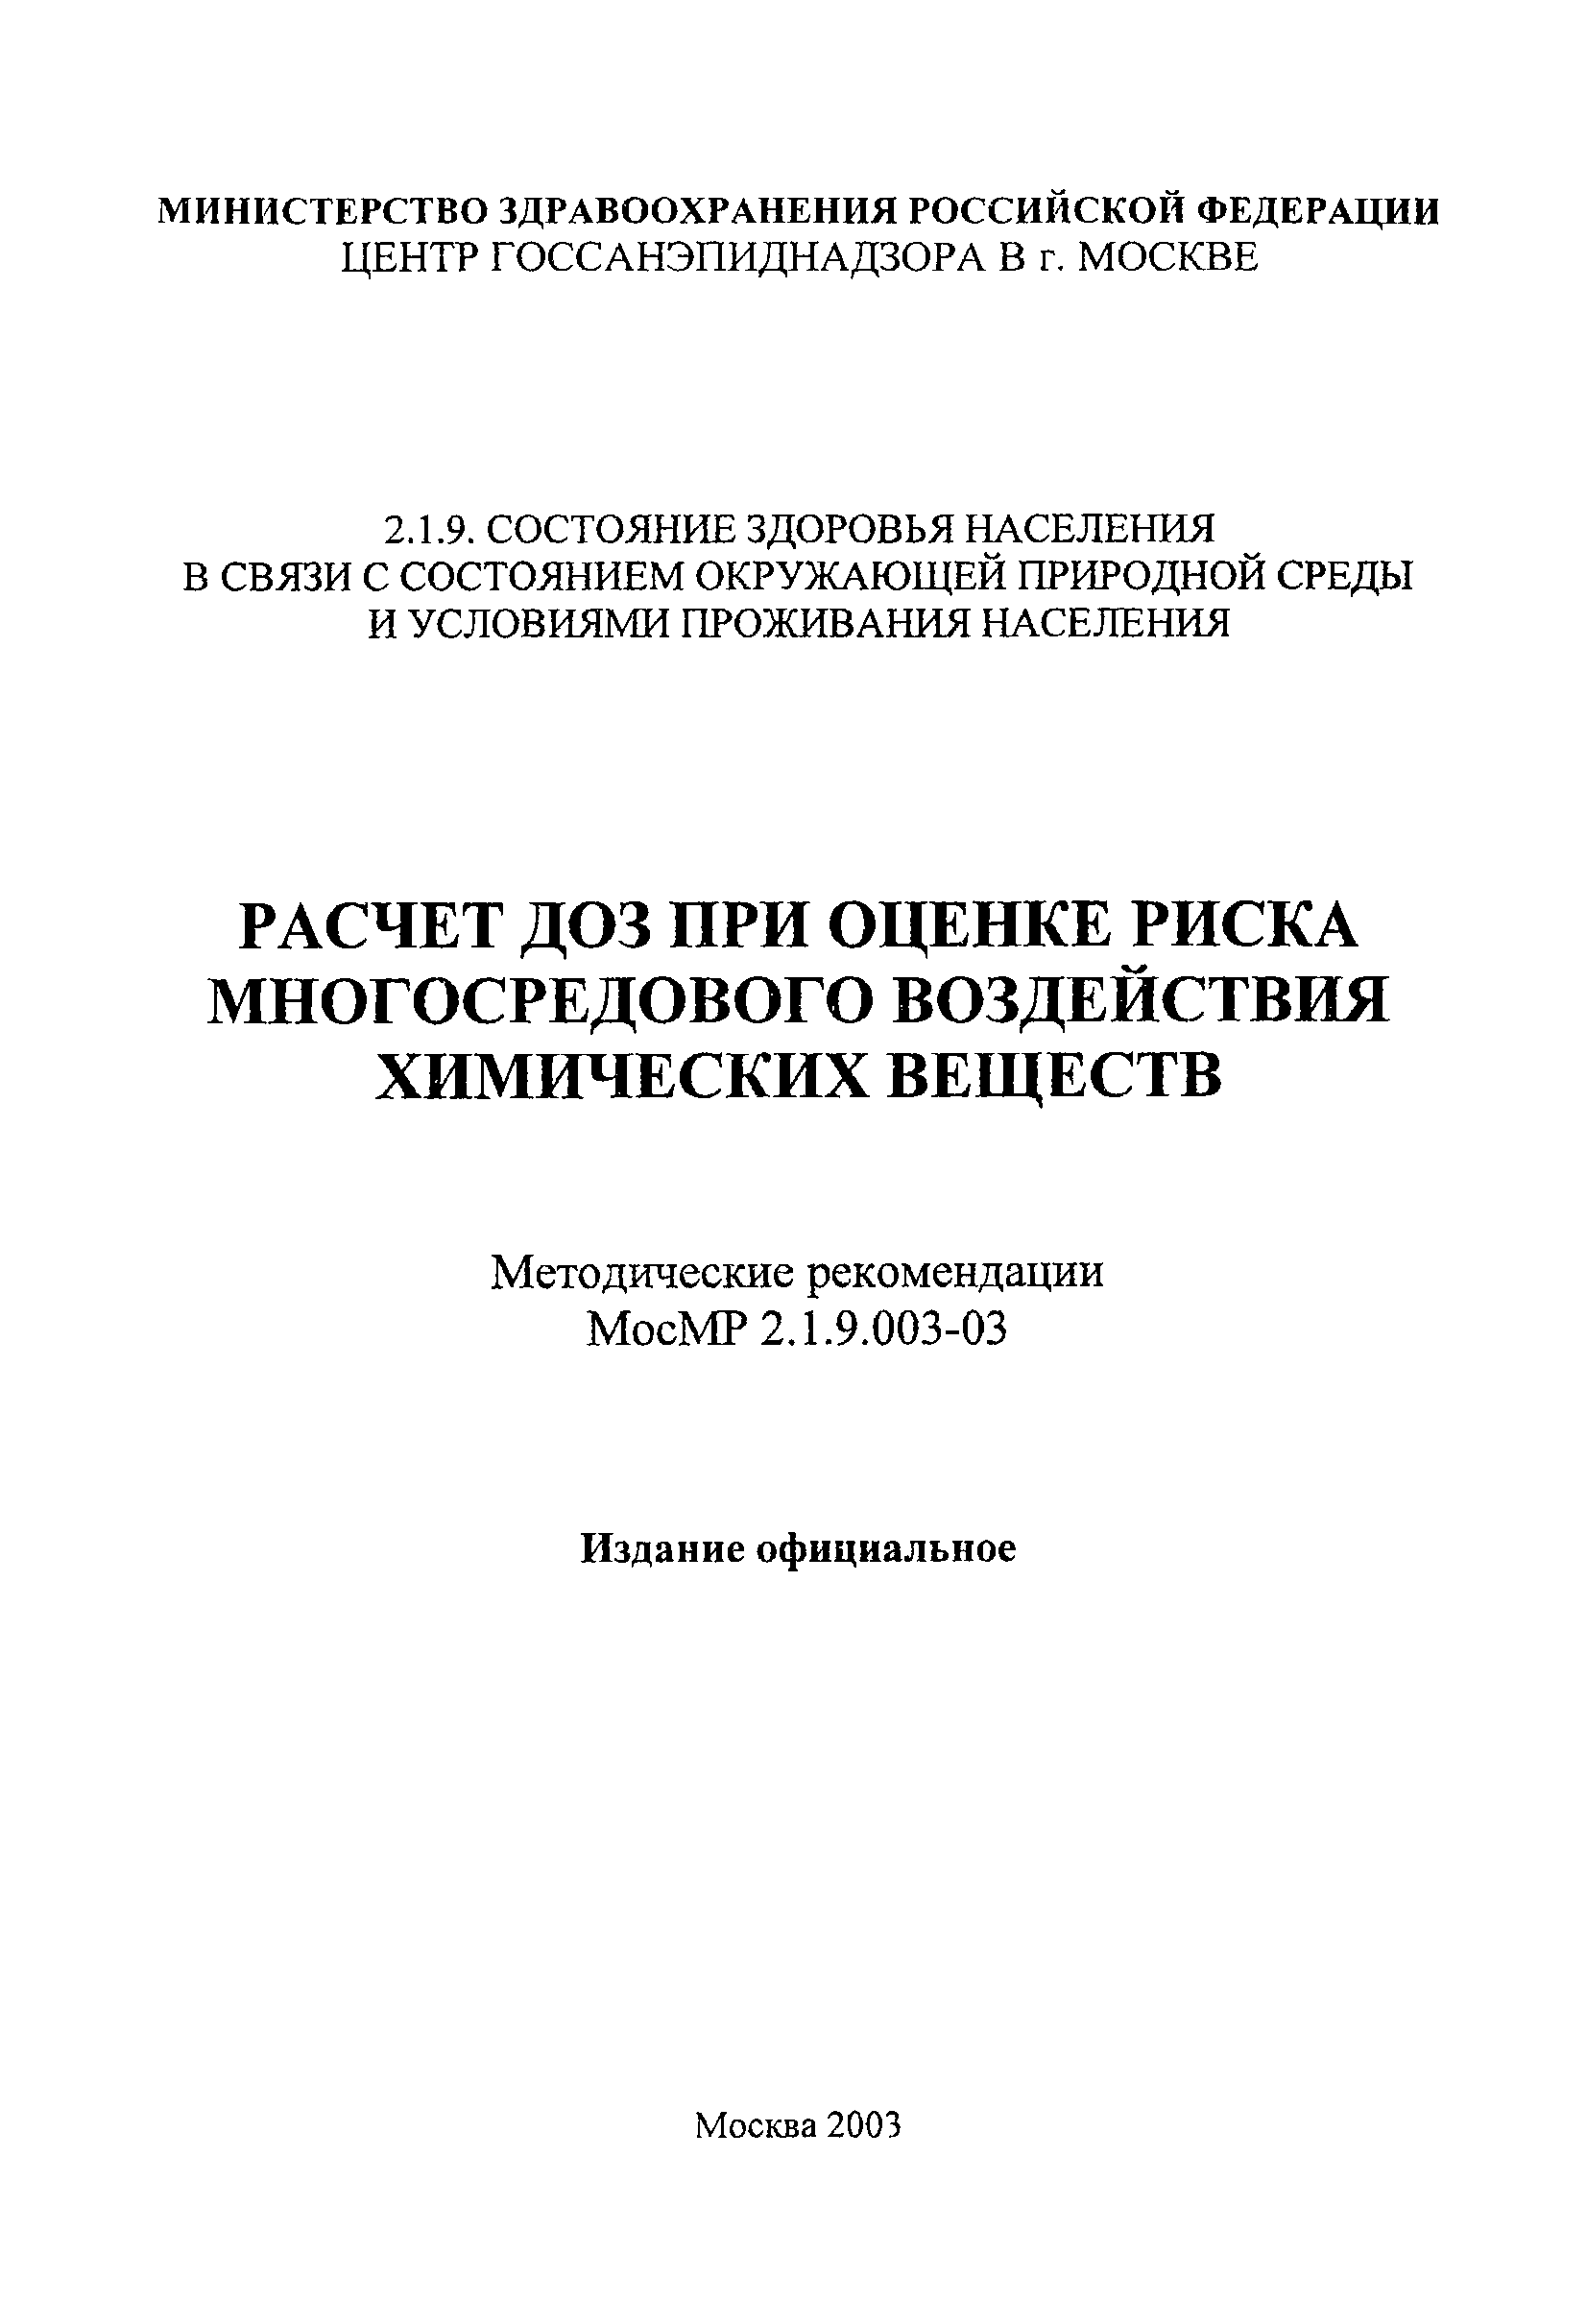 МосМР 2.1.9.003-03